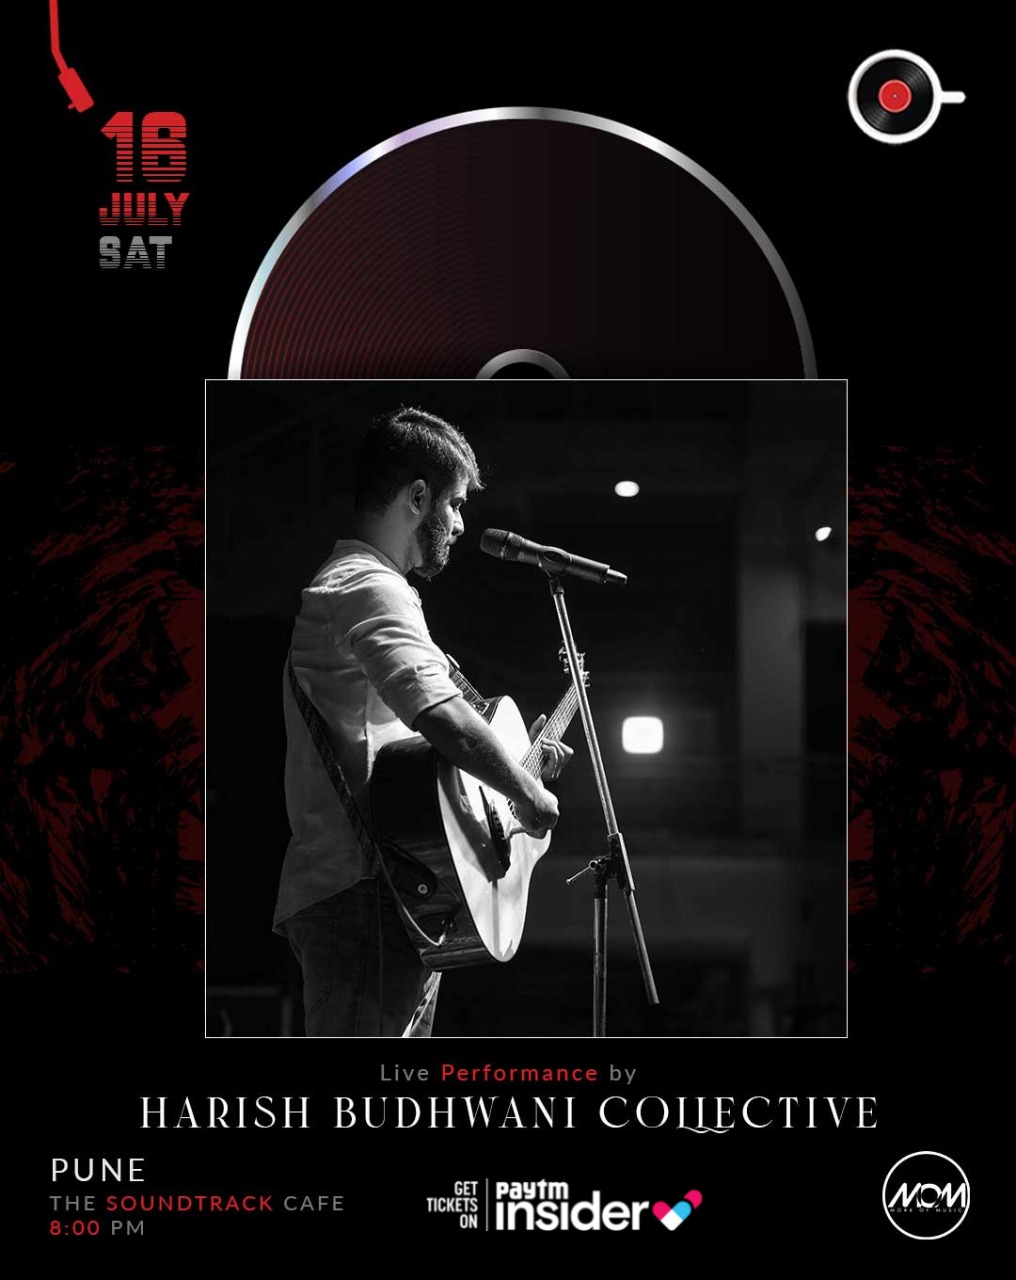 Harish Budhwani Collective